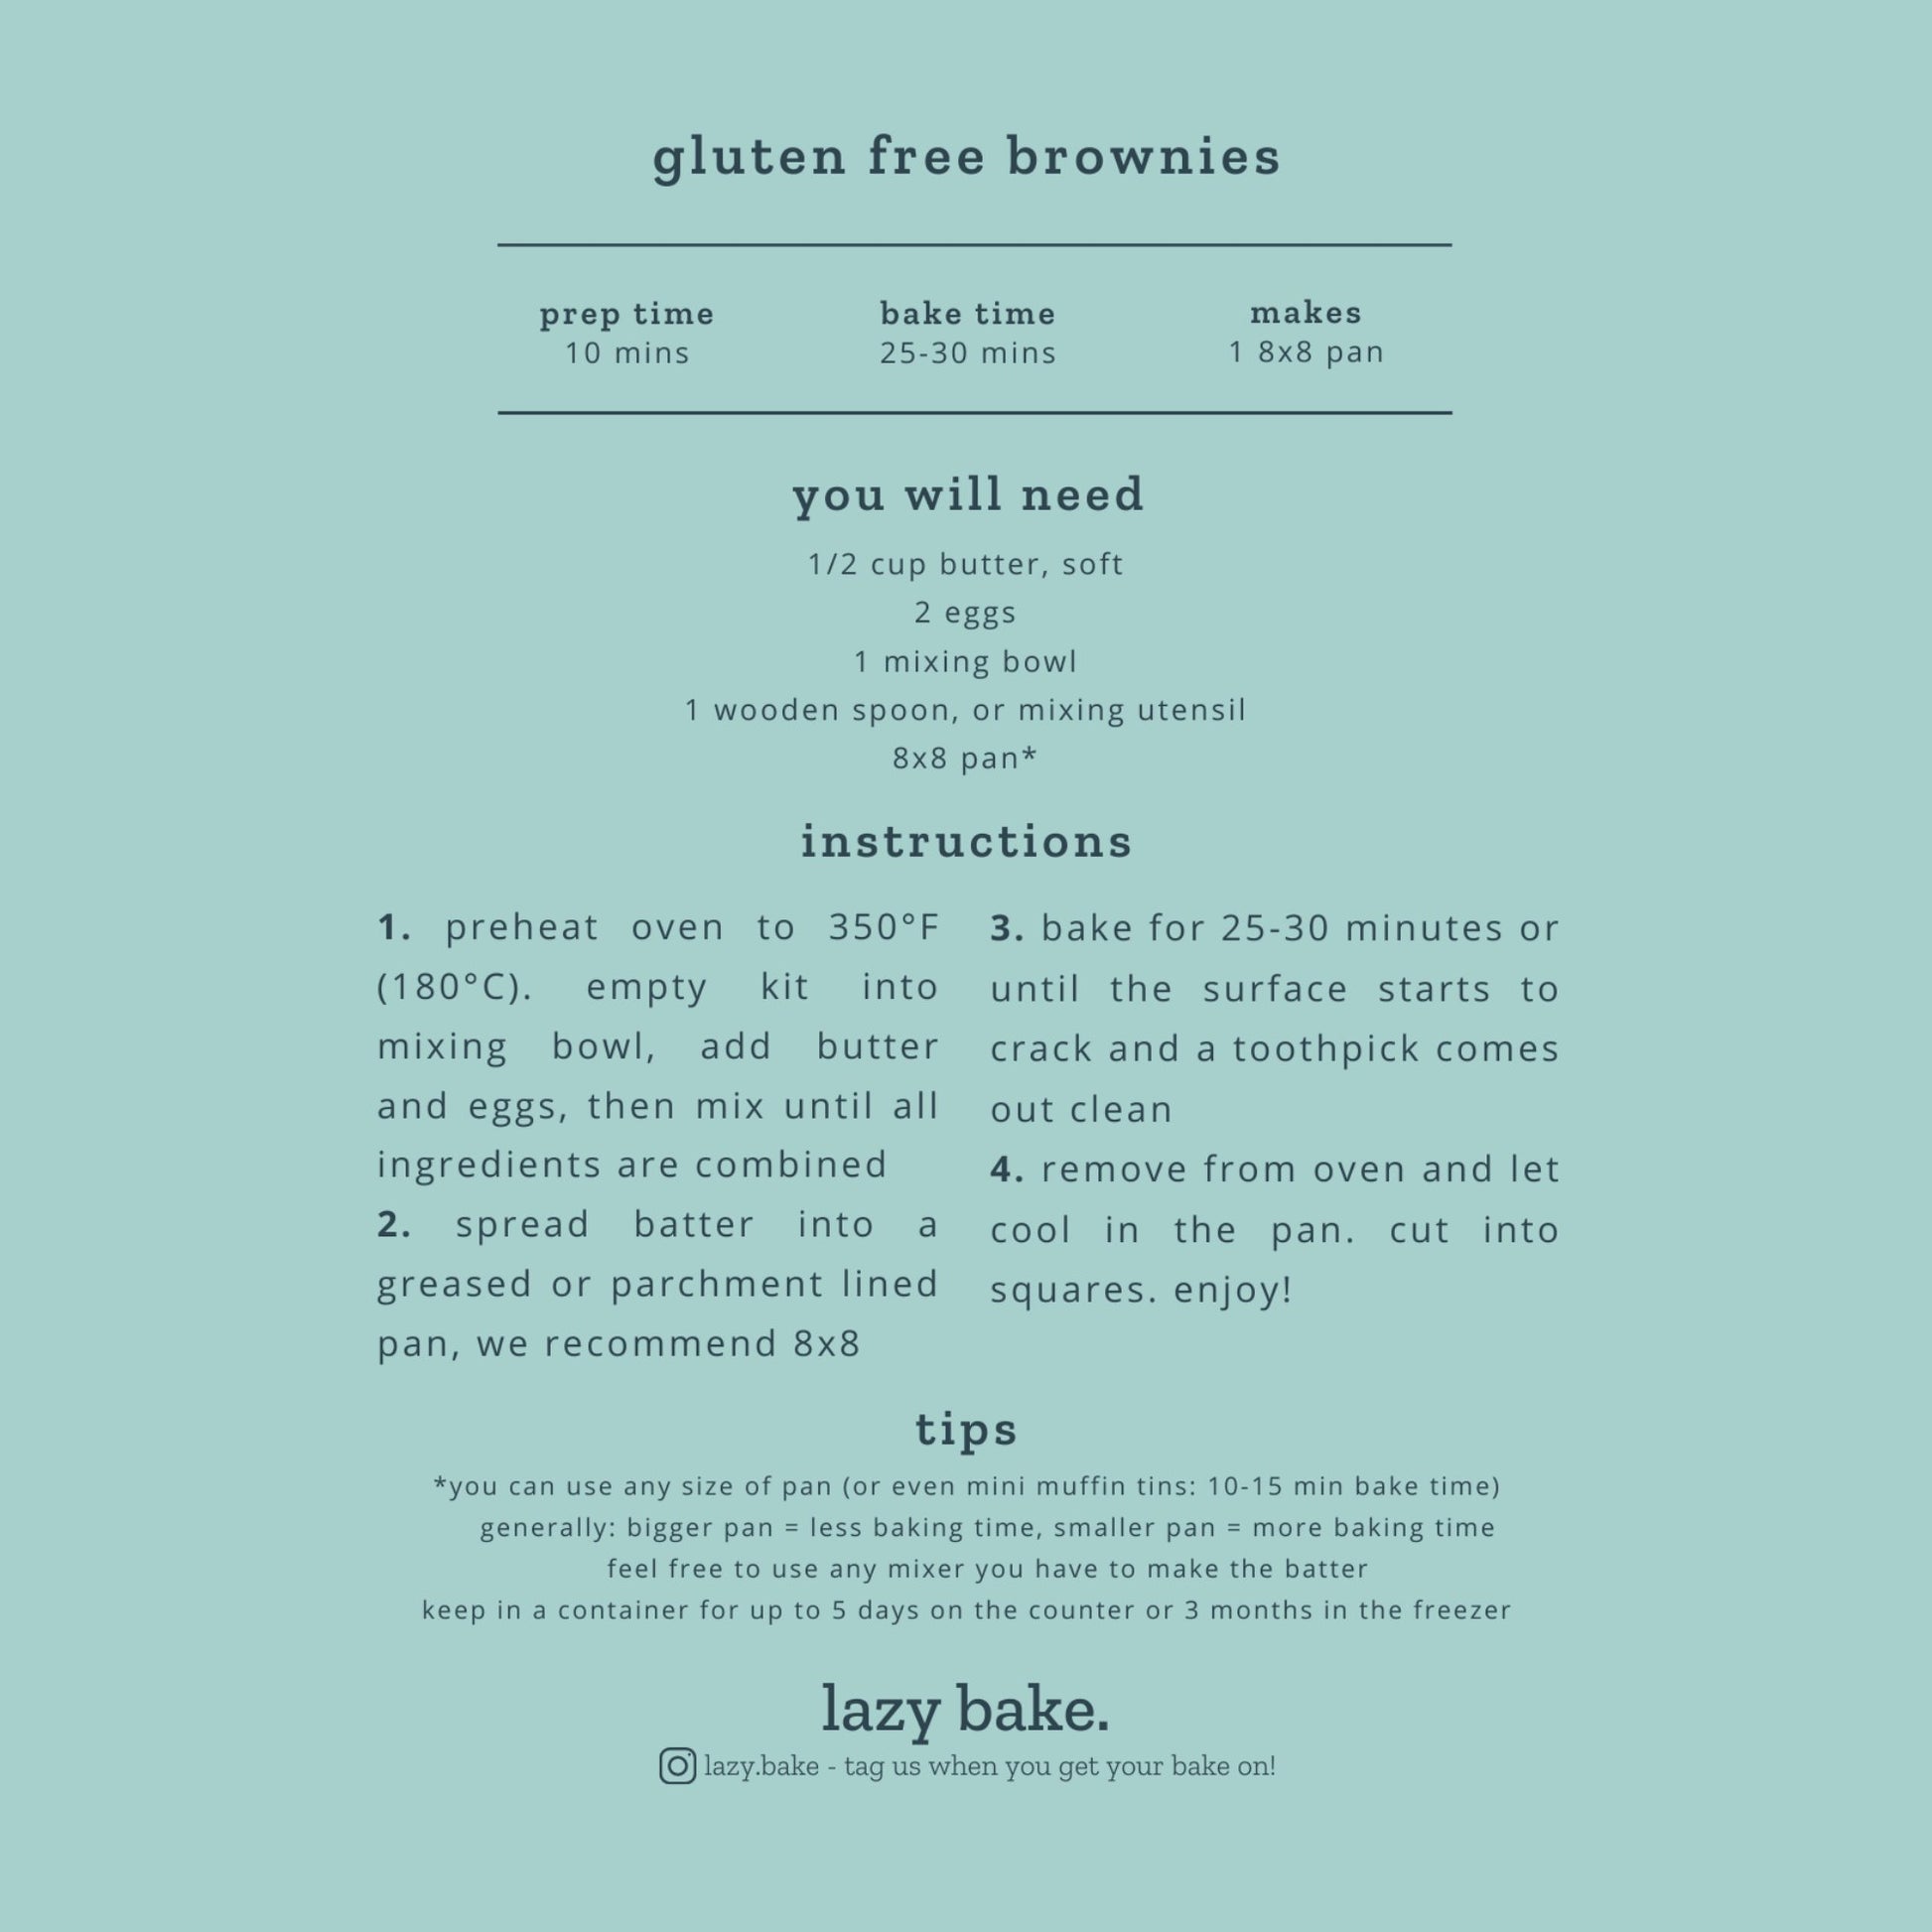 Gluten Free Brownies - Lazy Bake